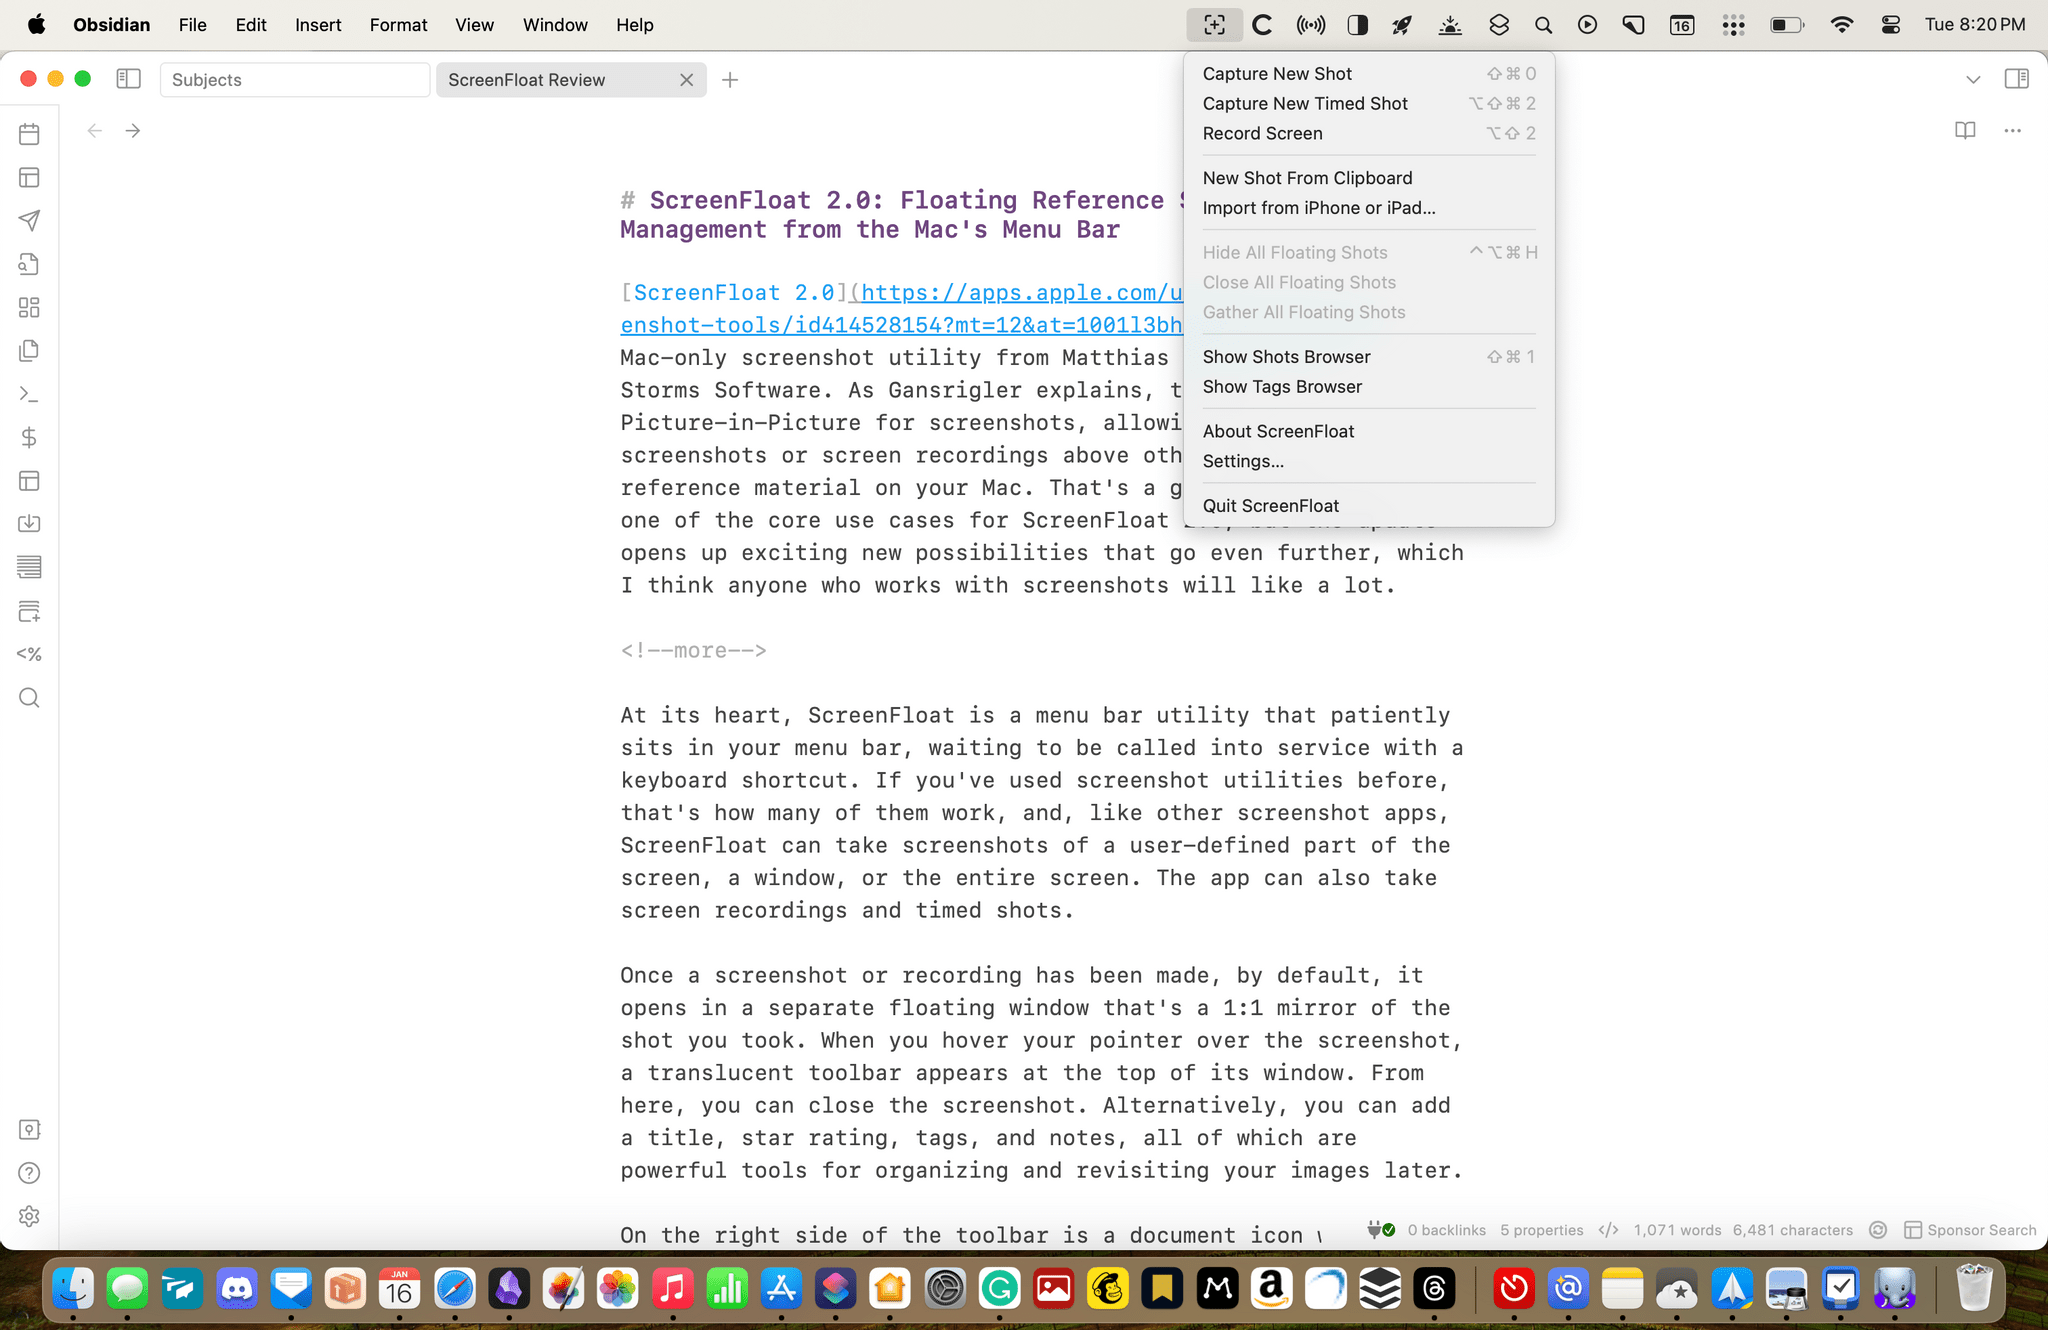 Activating ScreenFloat from the Mac menu bar.